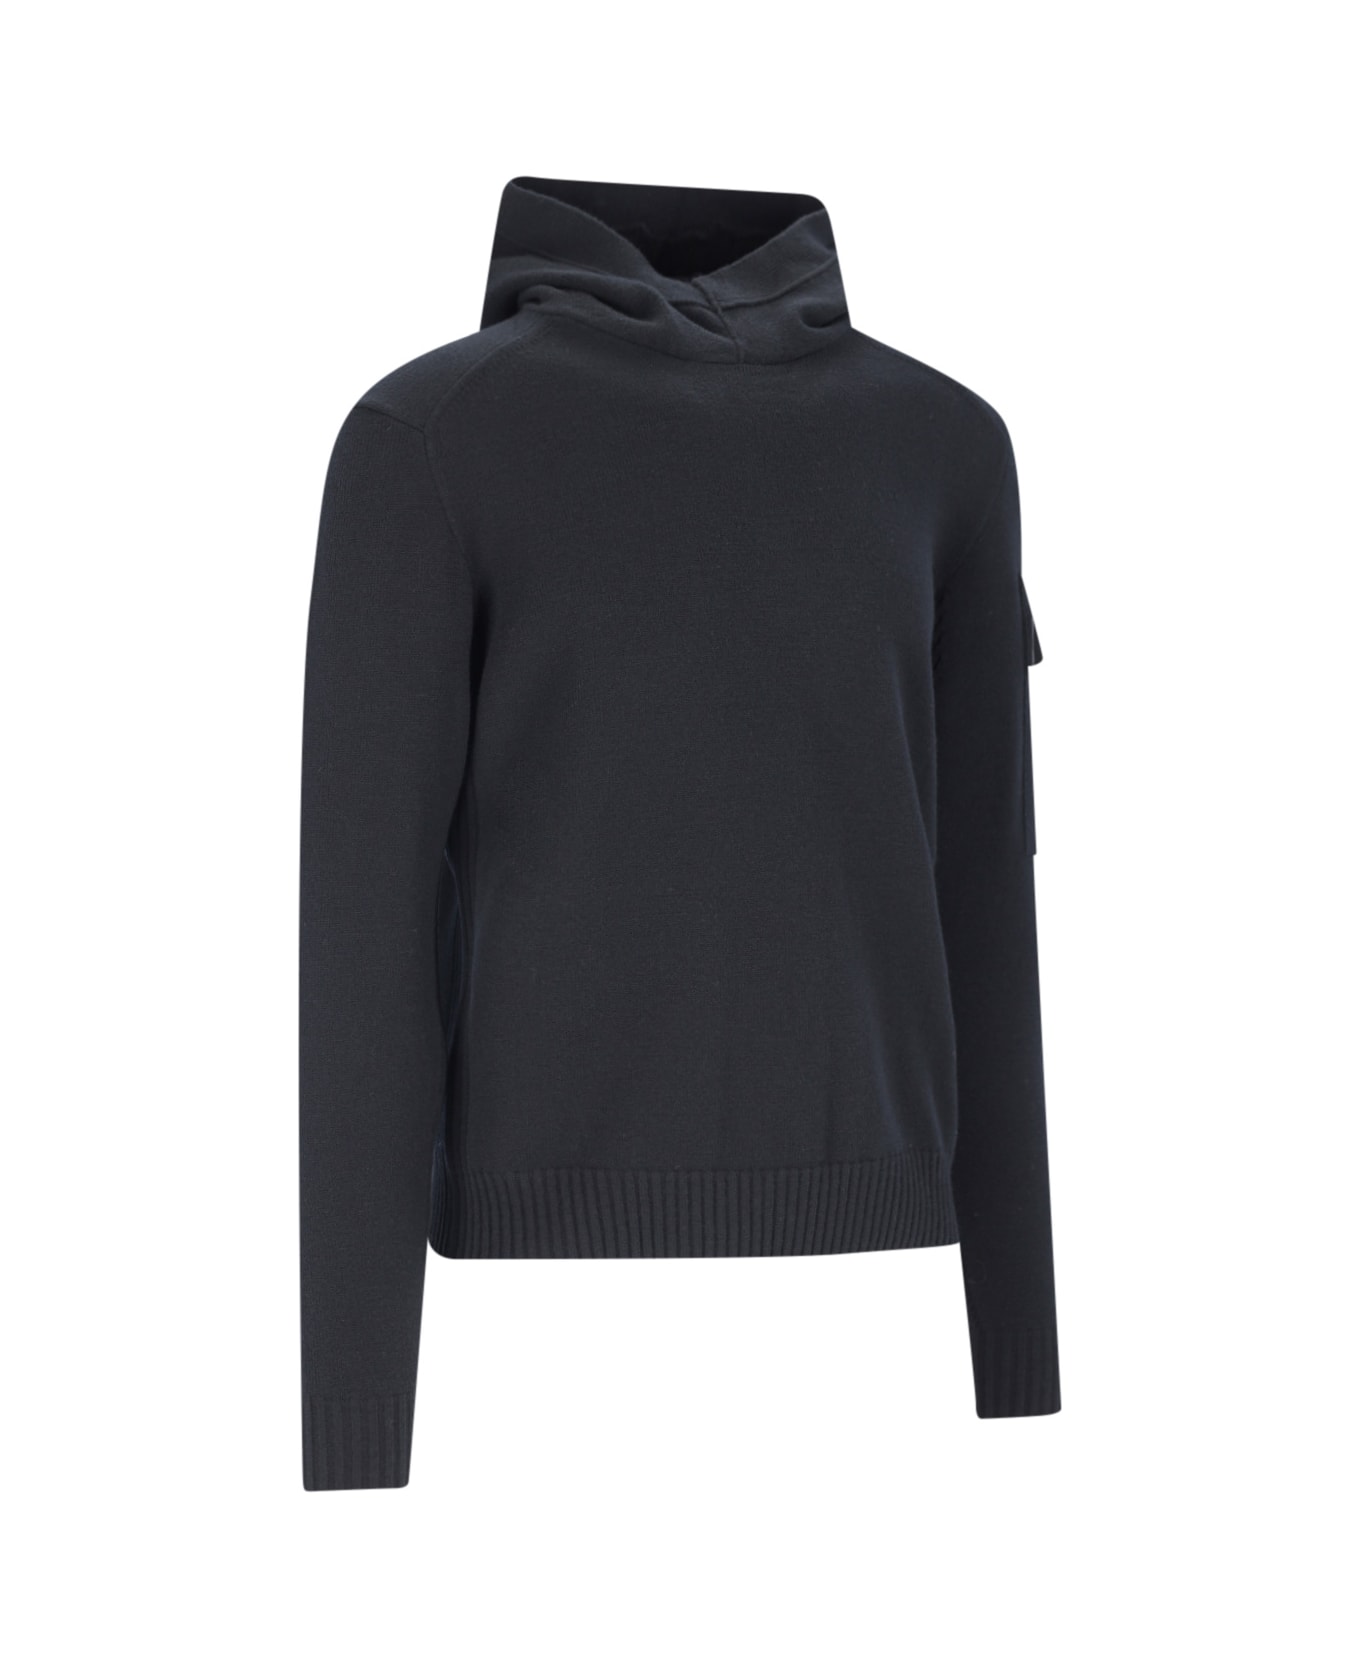 C.P. Company Black Virgin Wool Blend Sweatshirt - Black ニットウェア